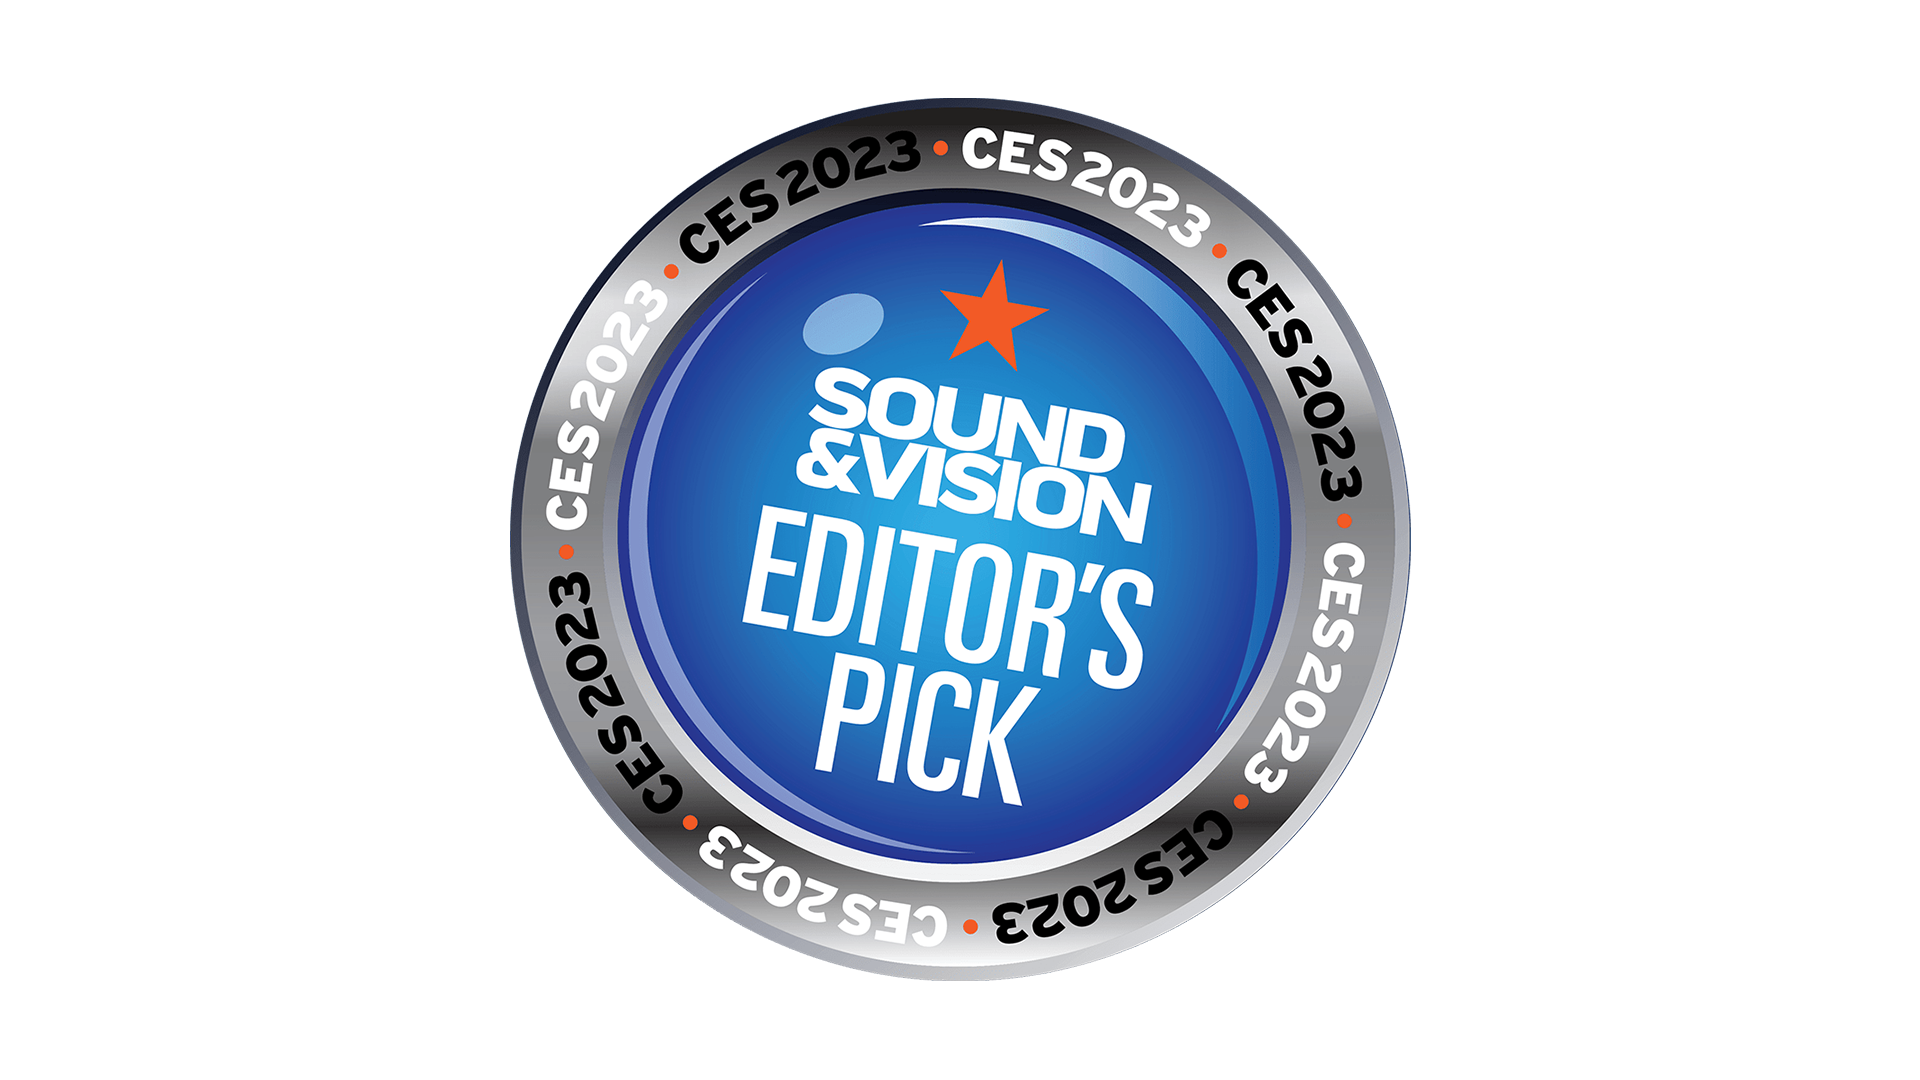 Sound & Vision Editor's Pick